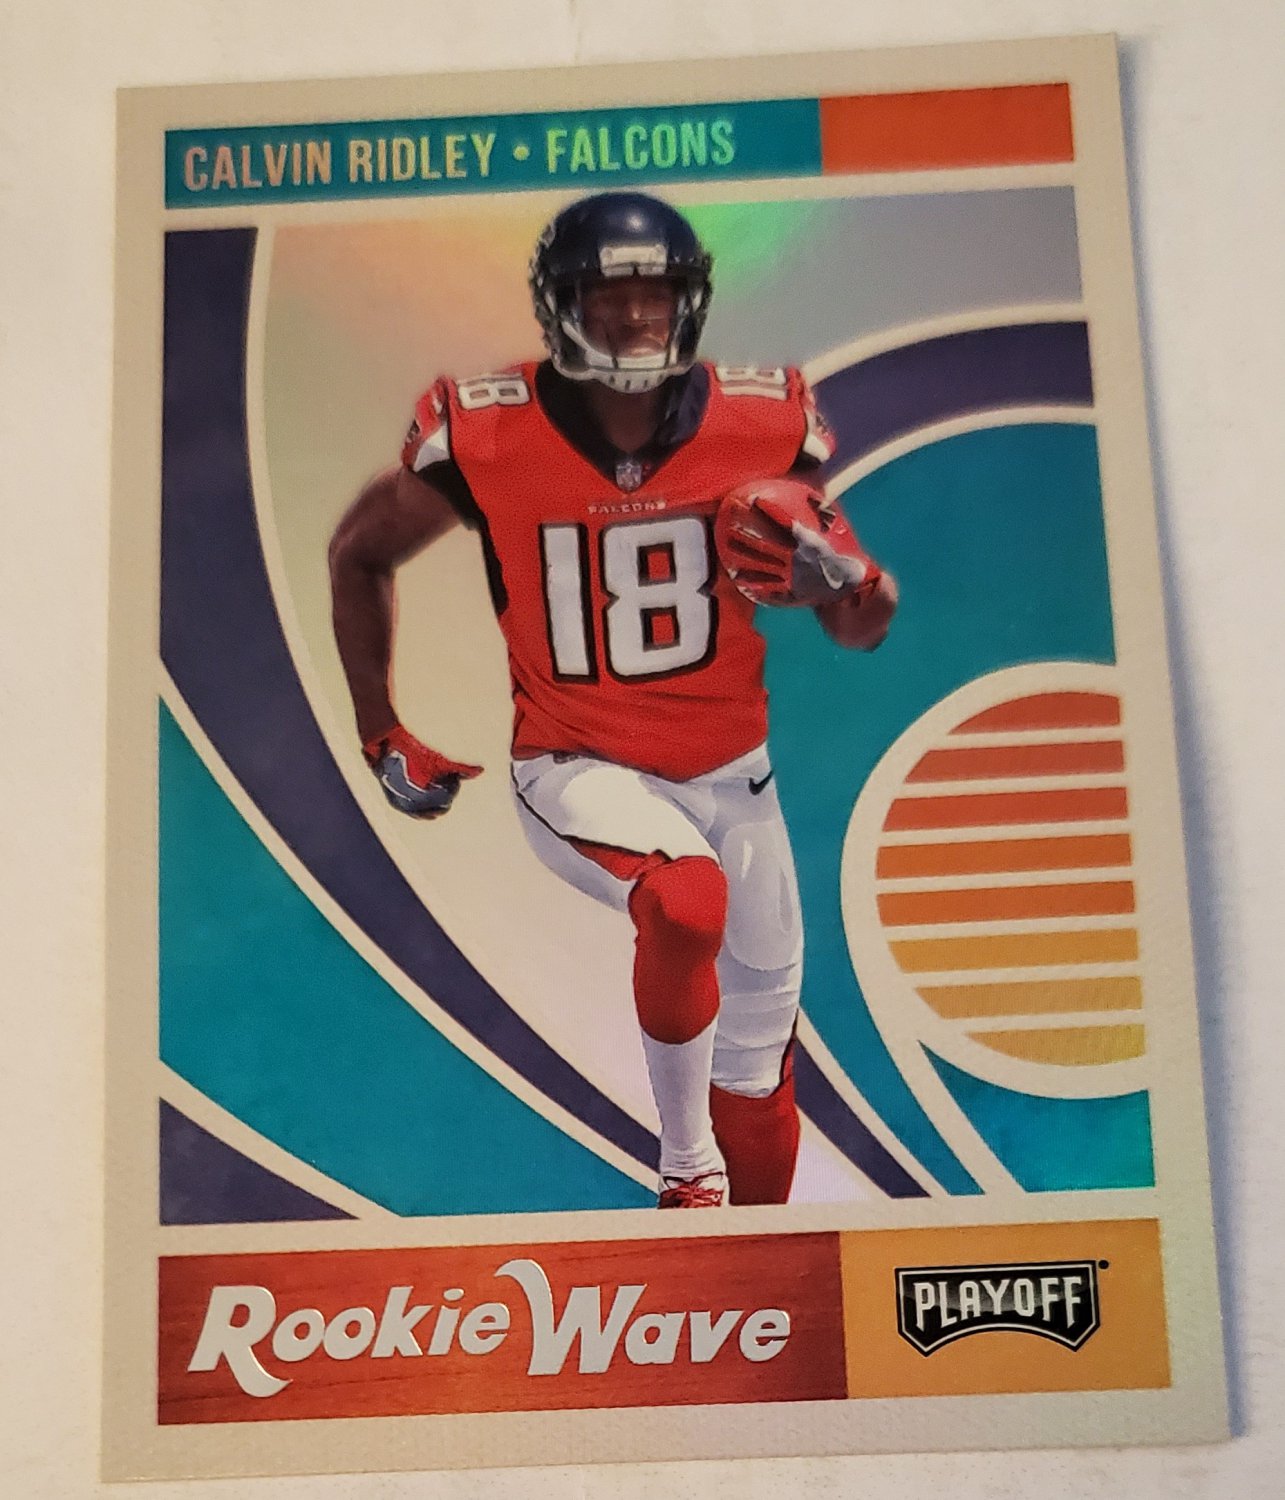 Calvin Ridley 2018 Playoff Rookie Wave Insert Card